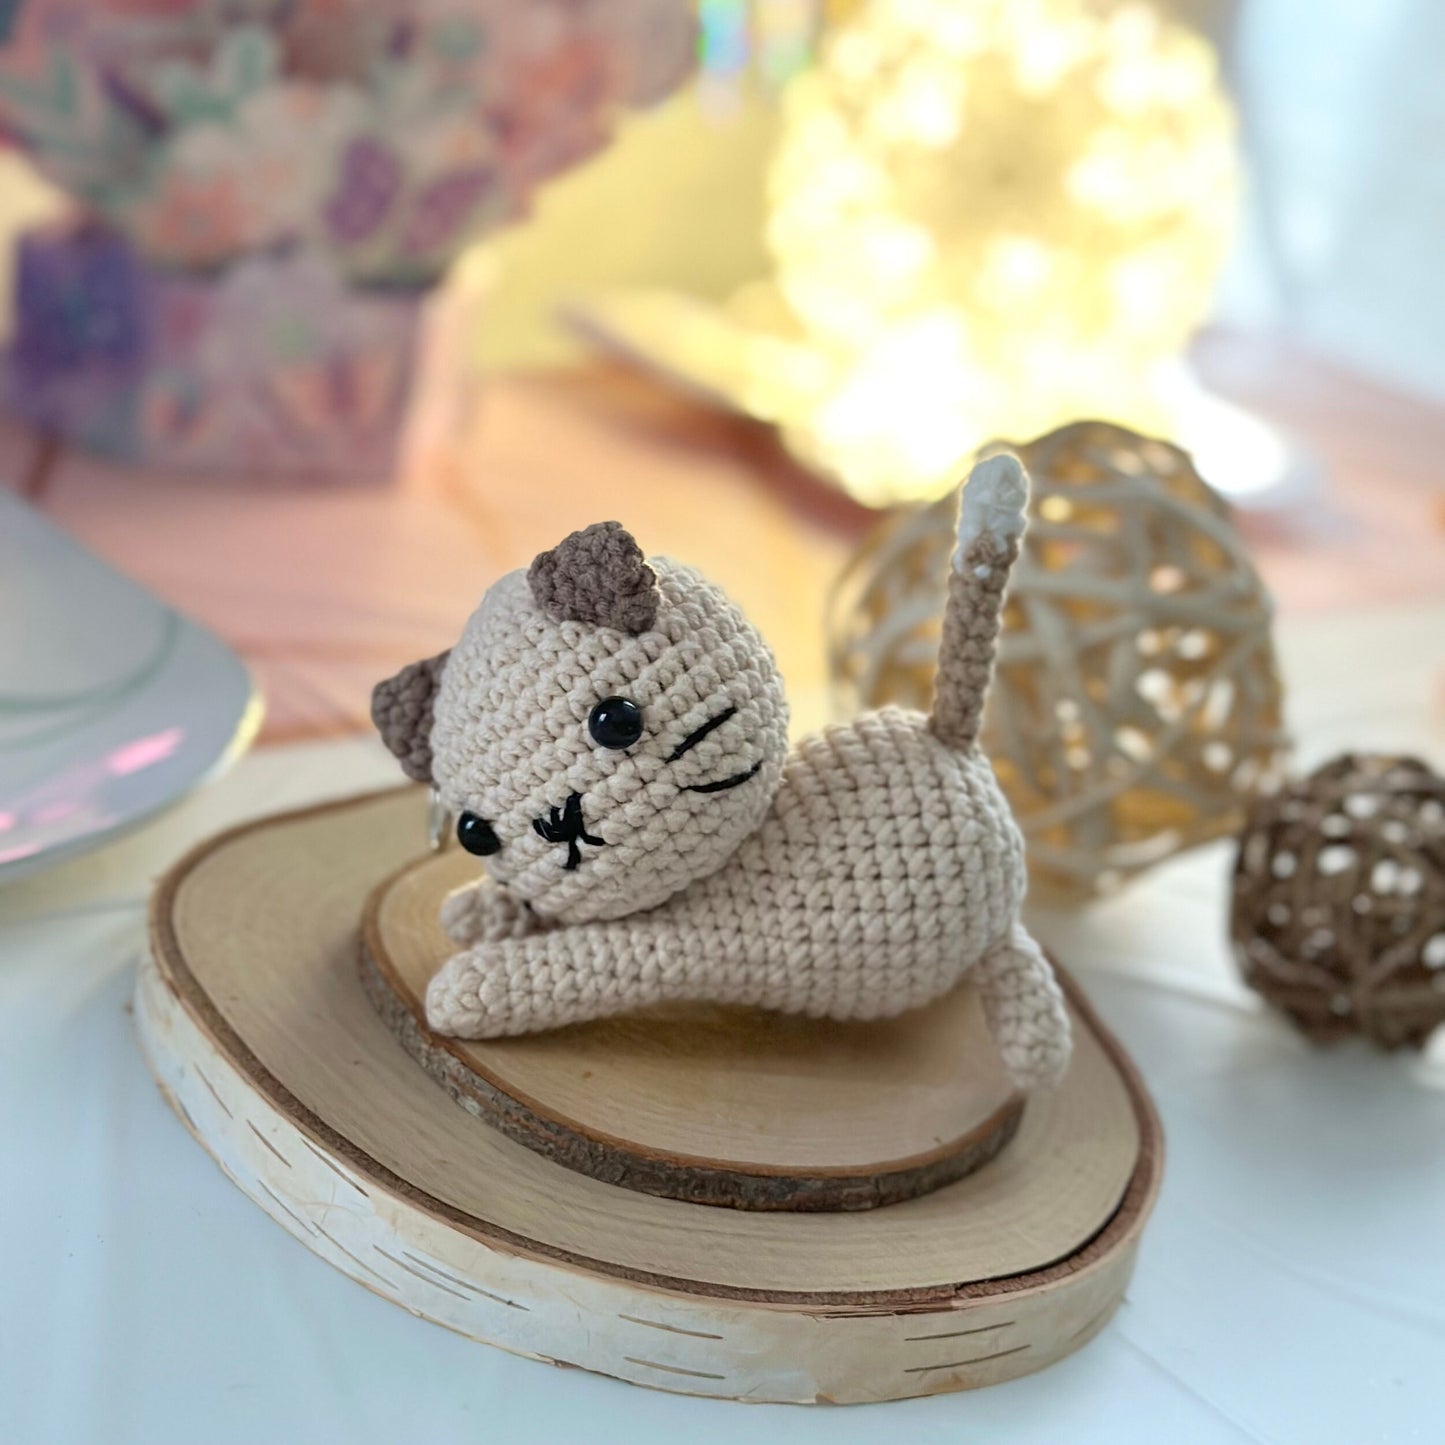 Handmade yarn cotton cat crochet, amigurumi cute little cat, home decor, adult hobby, perfect idea for gifts, present